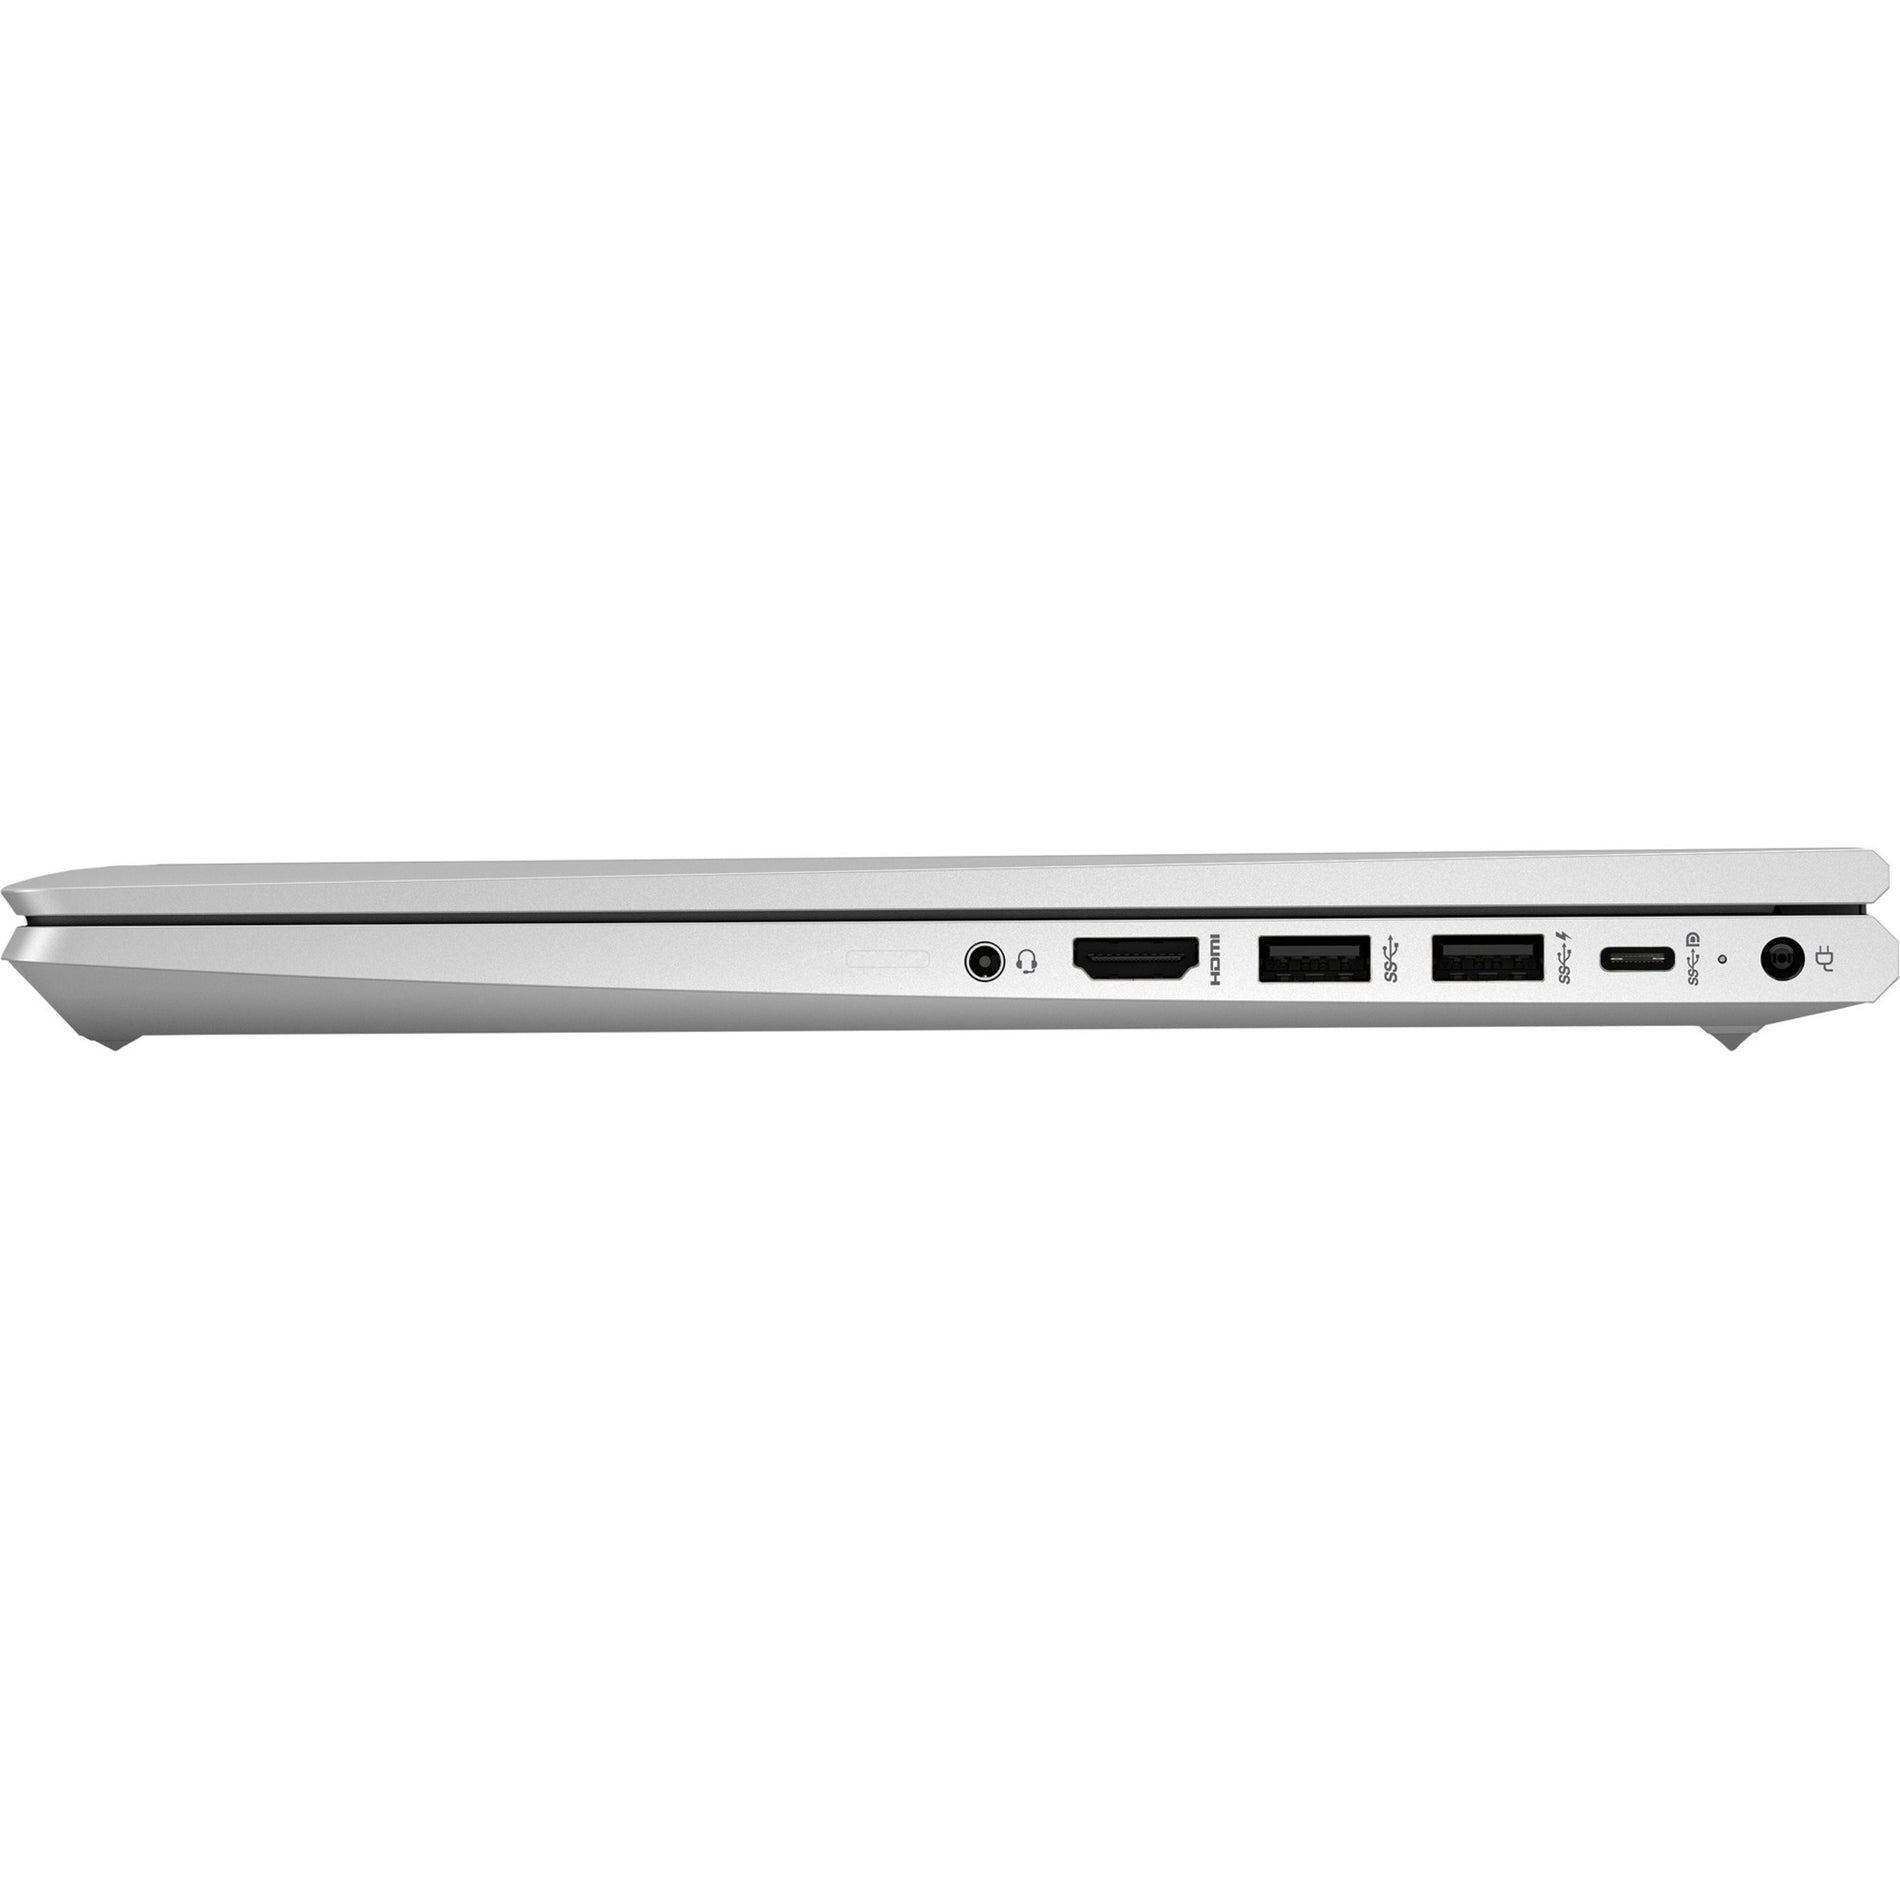 HP ProBook 445 G9 14" Notebook, Full HD, Ryzen 7, 8GB RAM, 256GB SSD, Windows 10 Pro